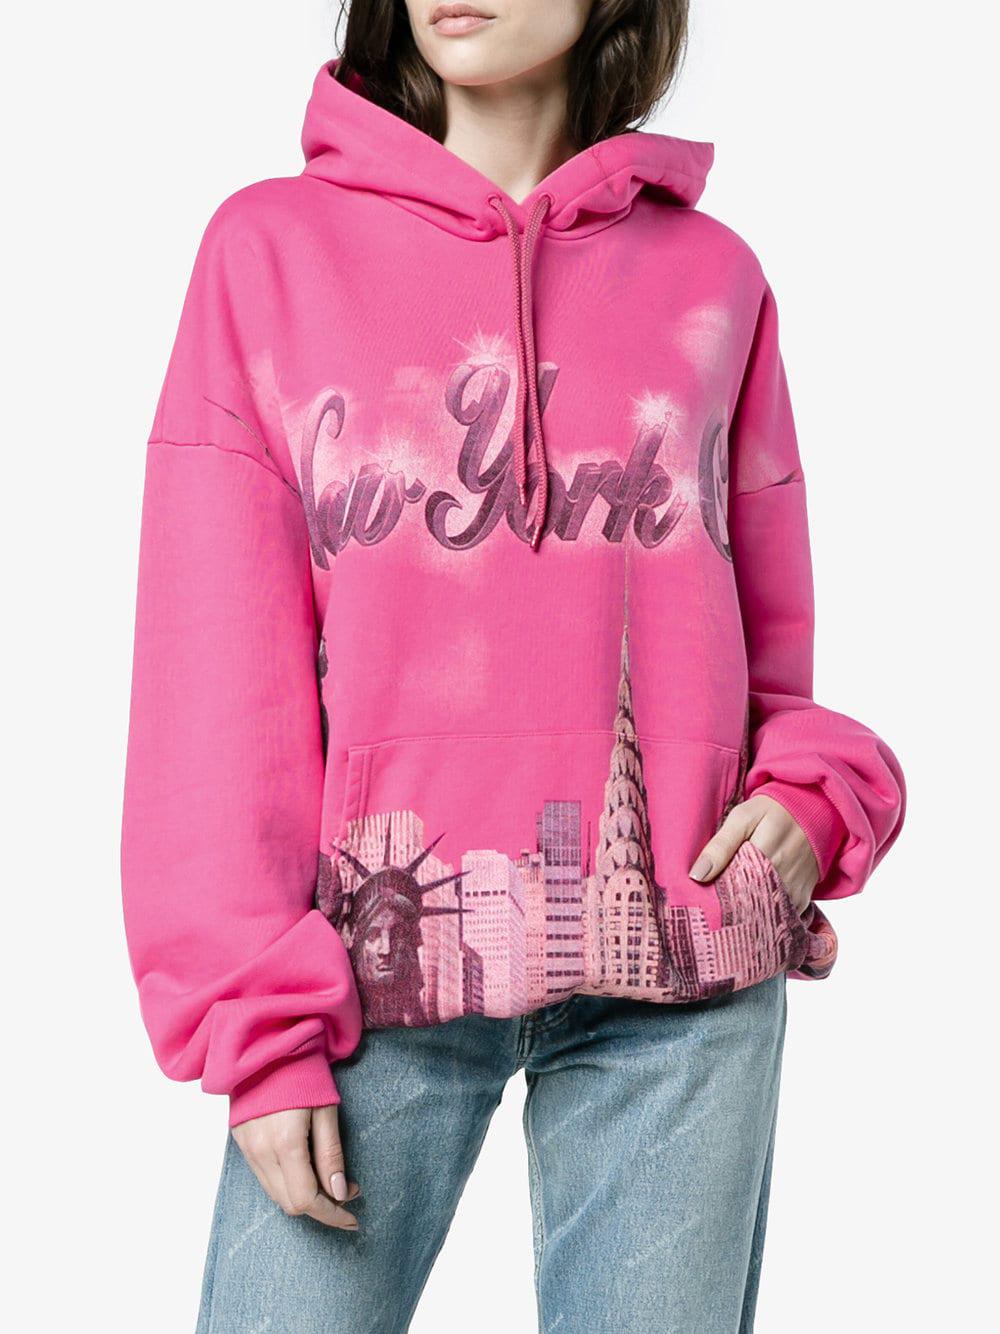 Balenciaga New York City Graphic Hoodie  Pink Sweatshirts  Hoodies  Clothing  BAL106133  The RealReal